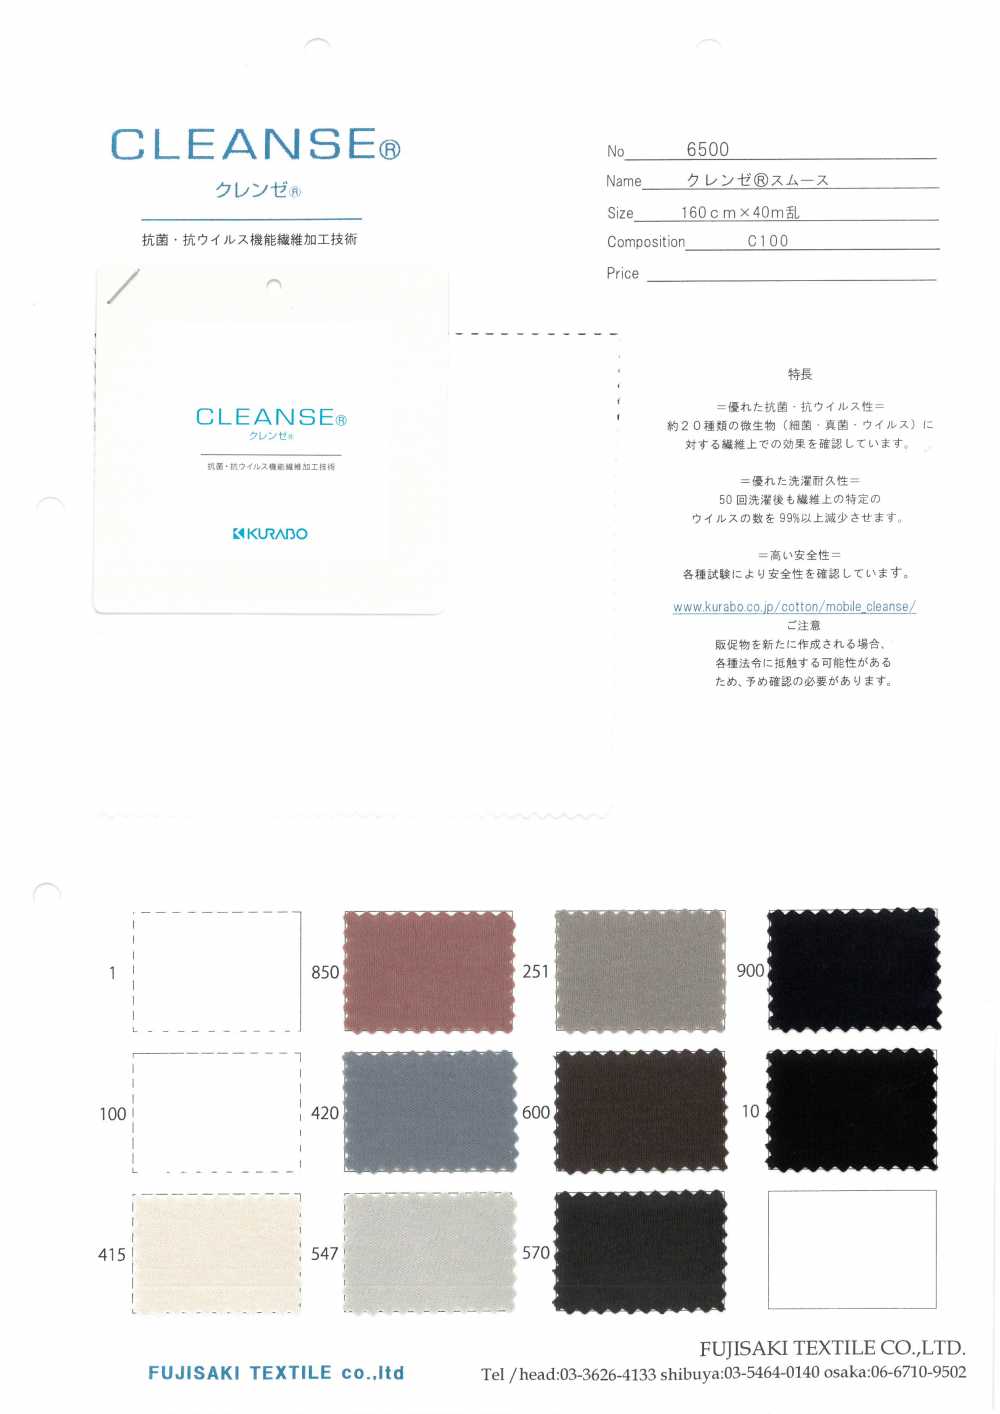 6500 CLEANSE Vải Dệt Kim Tròn Interlock Fujisaki Textile